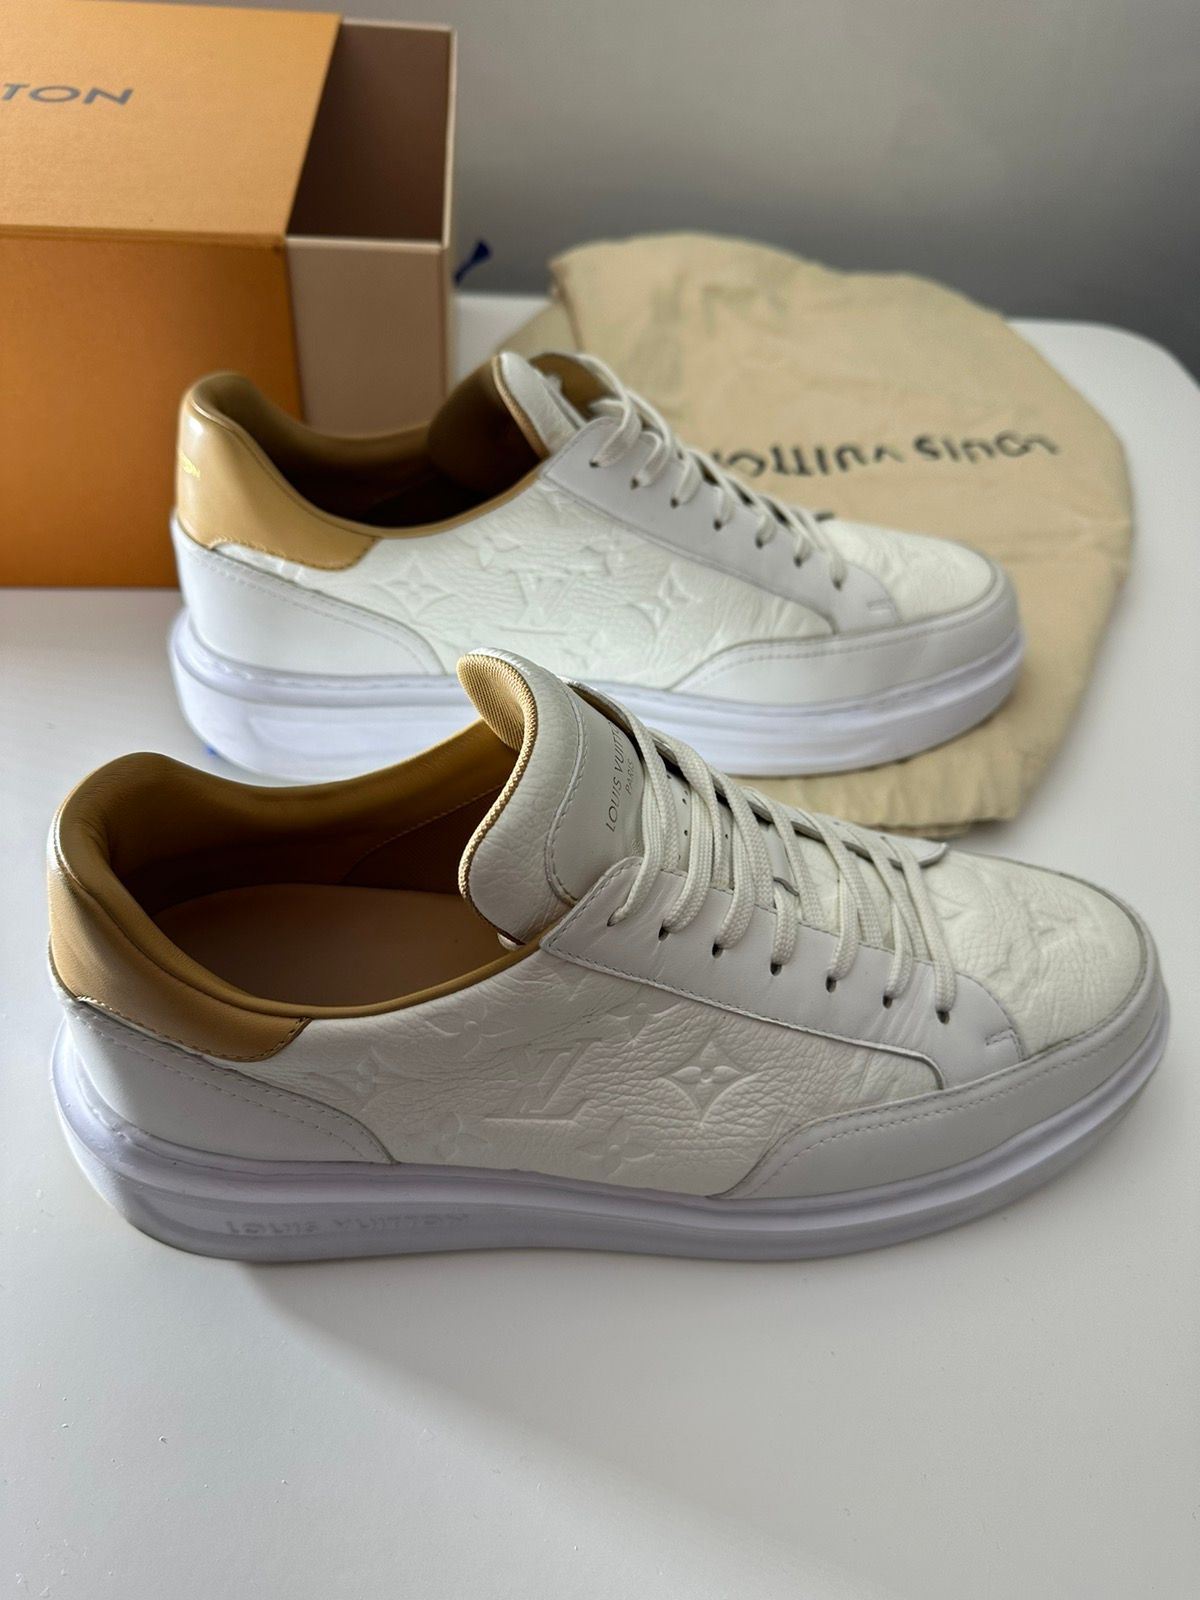 Louis Vuitton Beverly Hills Sneaker White. Size 12.0